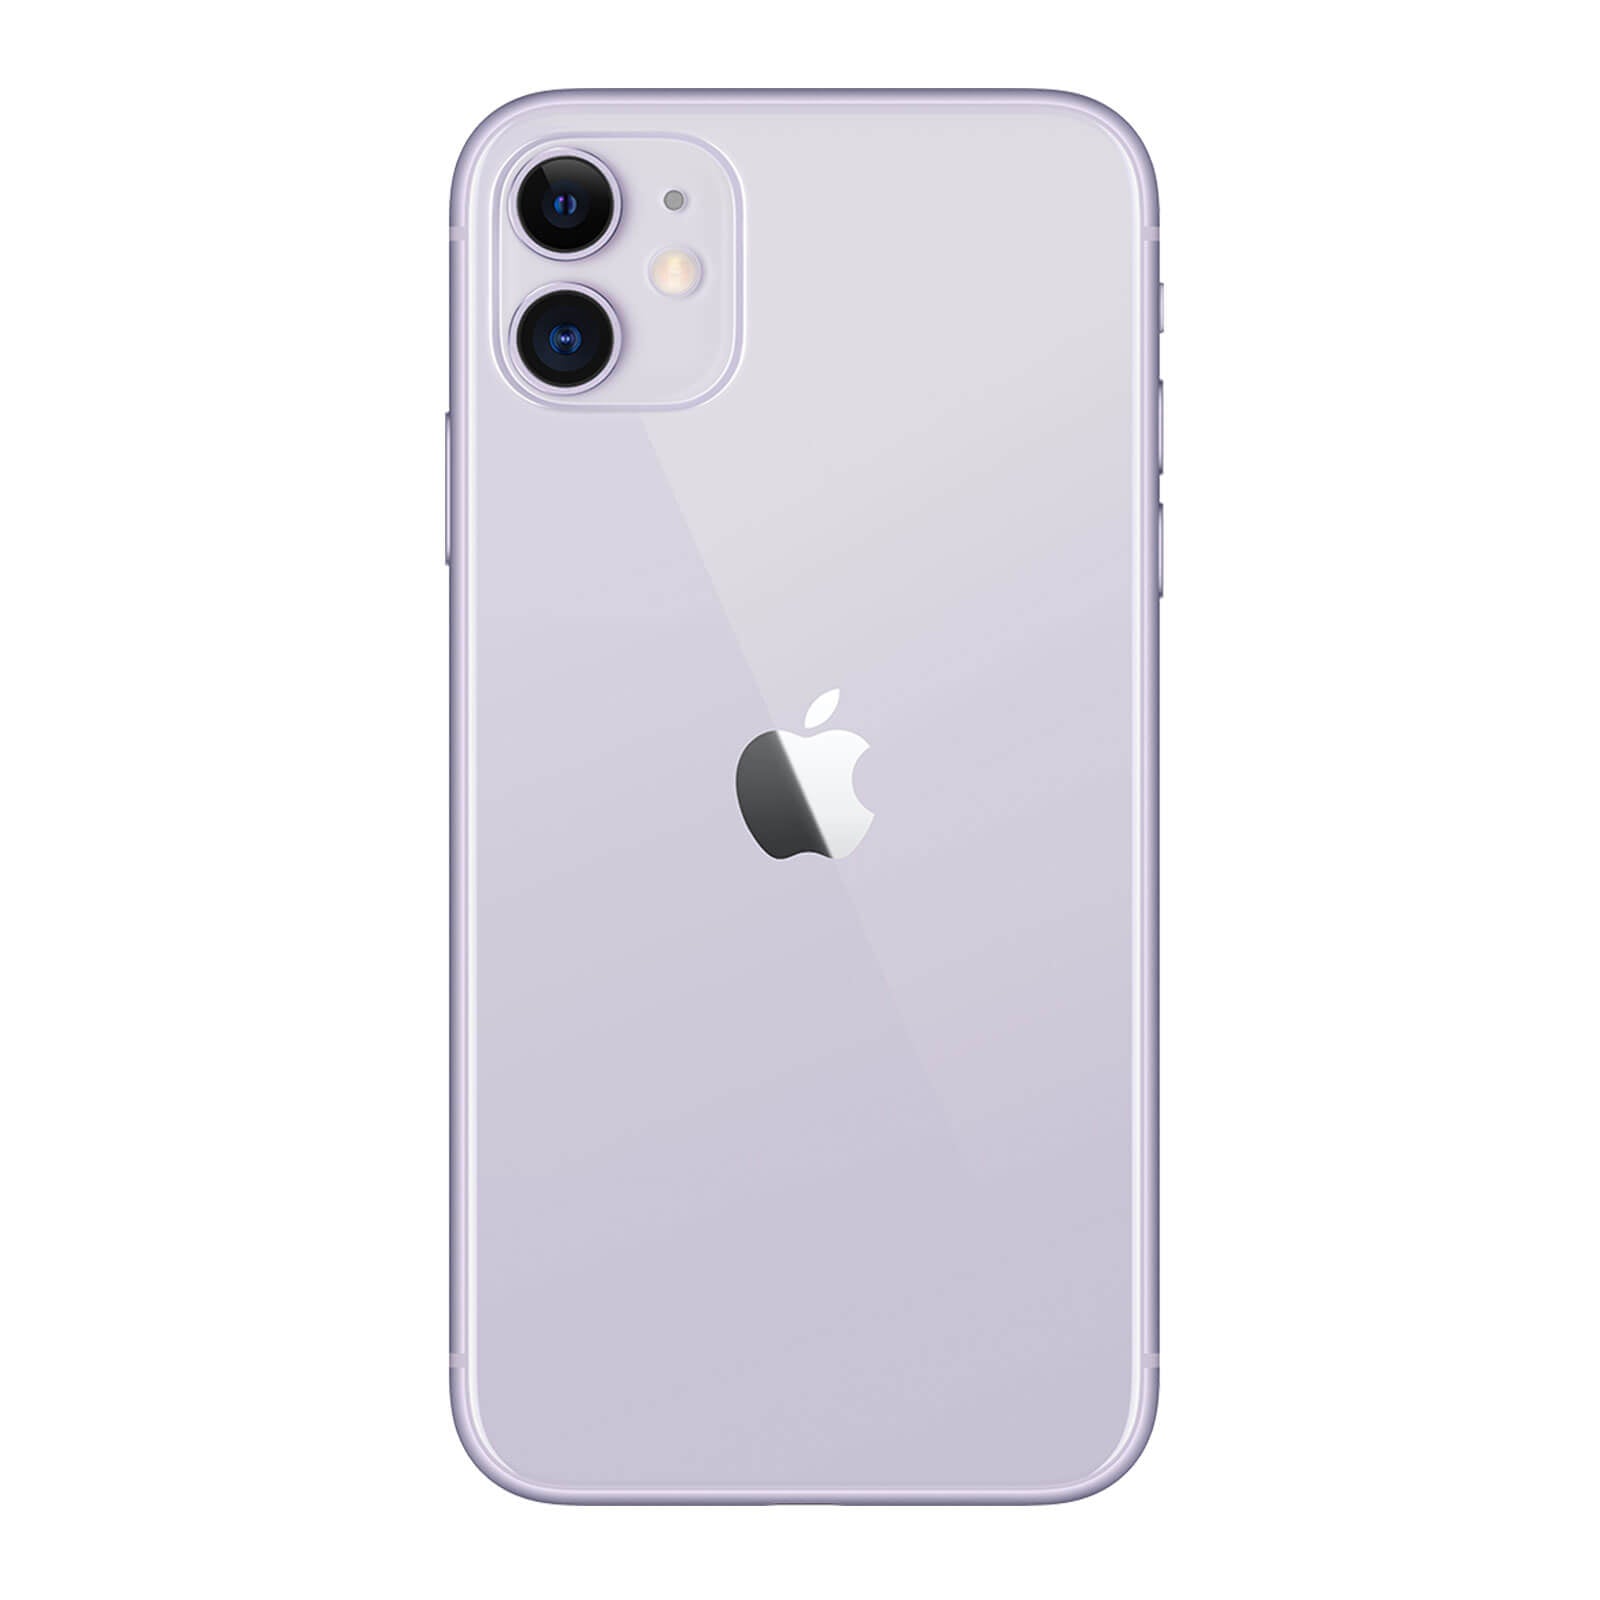 Apple iPhone 11 128GB Purple Good - Sprint